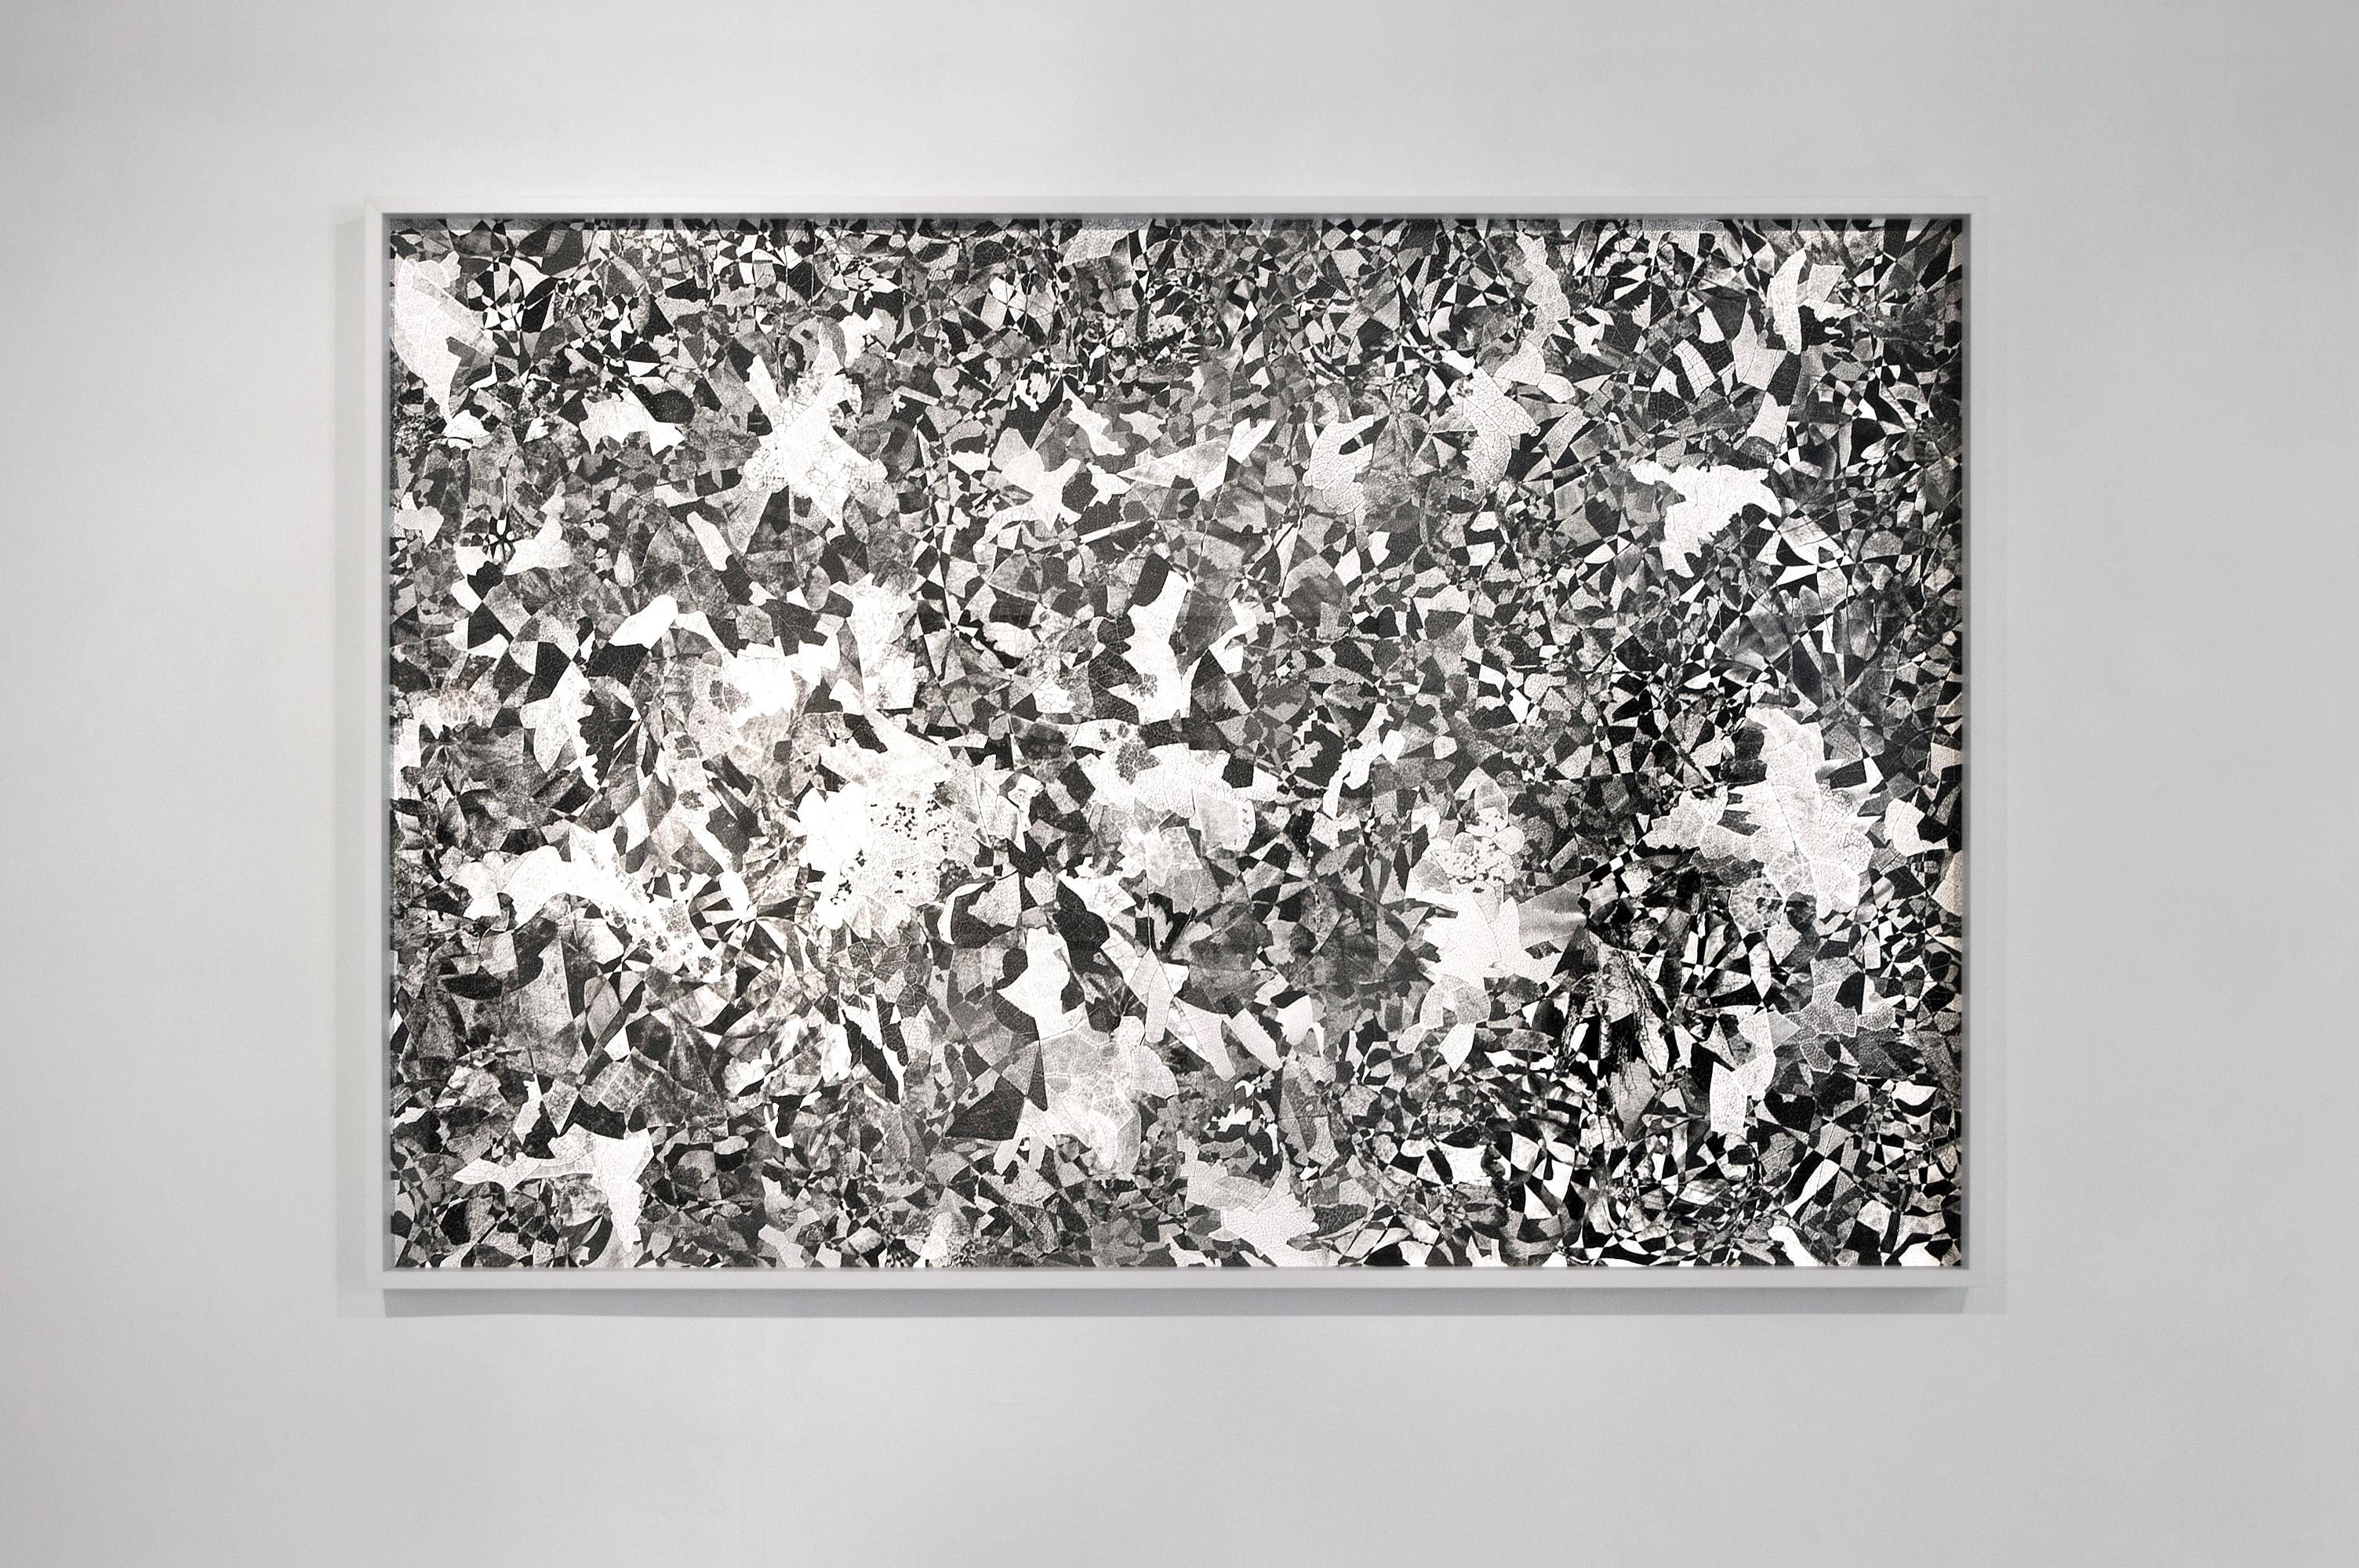 Feldforschung 05 - Contemporary Abstract Diamond Texture Photograph - Gray Black and White Photograph by Hubert Blanz